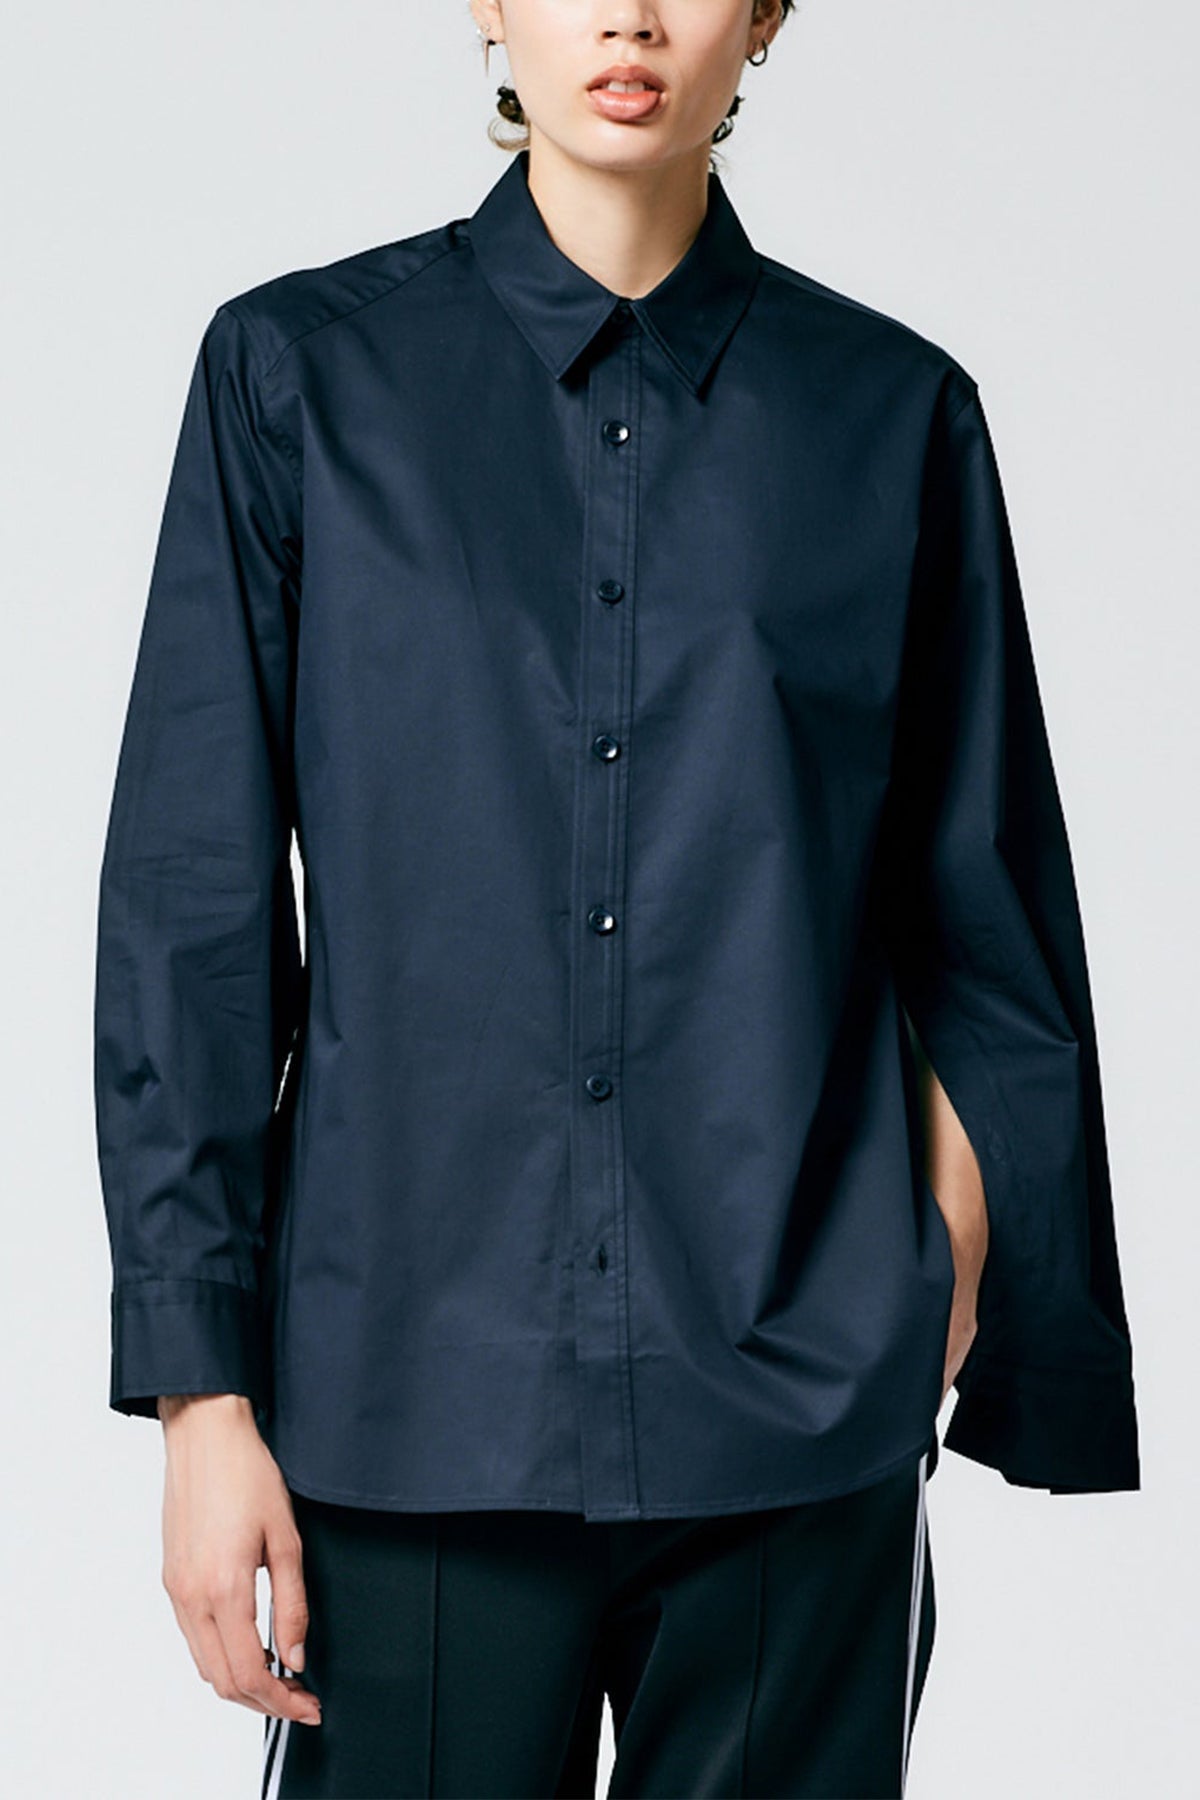 Eco Poplin Shirt With Inseam Vent in Dark Navy - shop-olivia.com